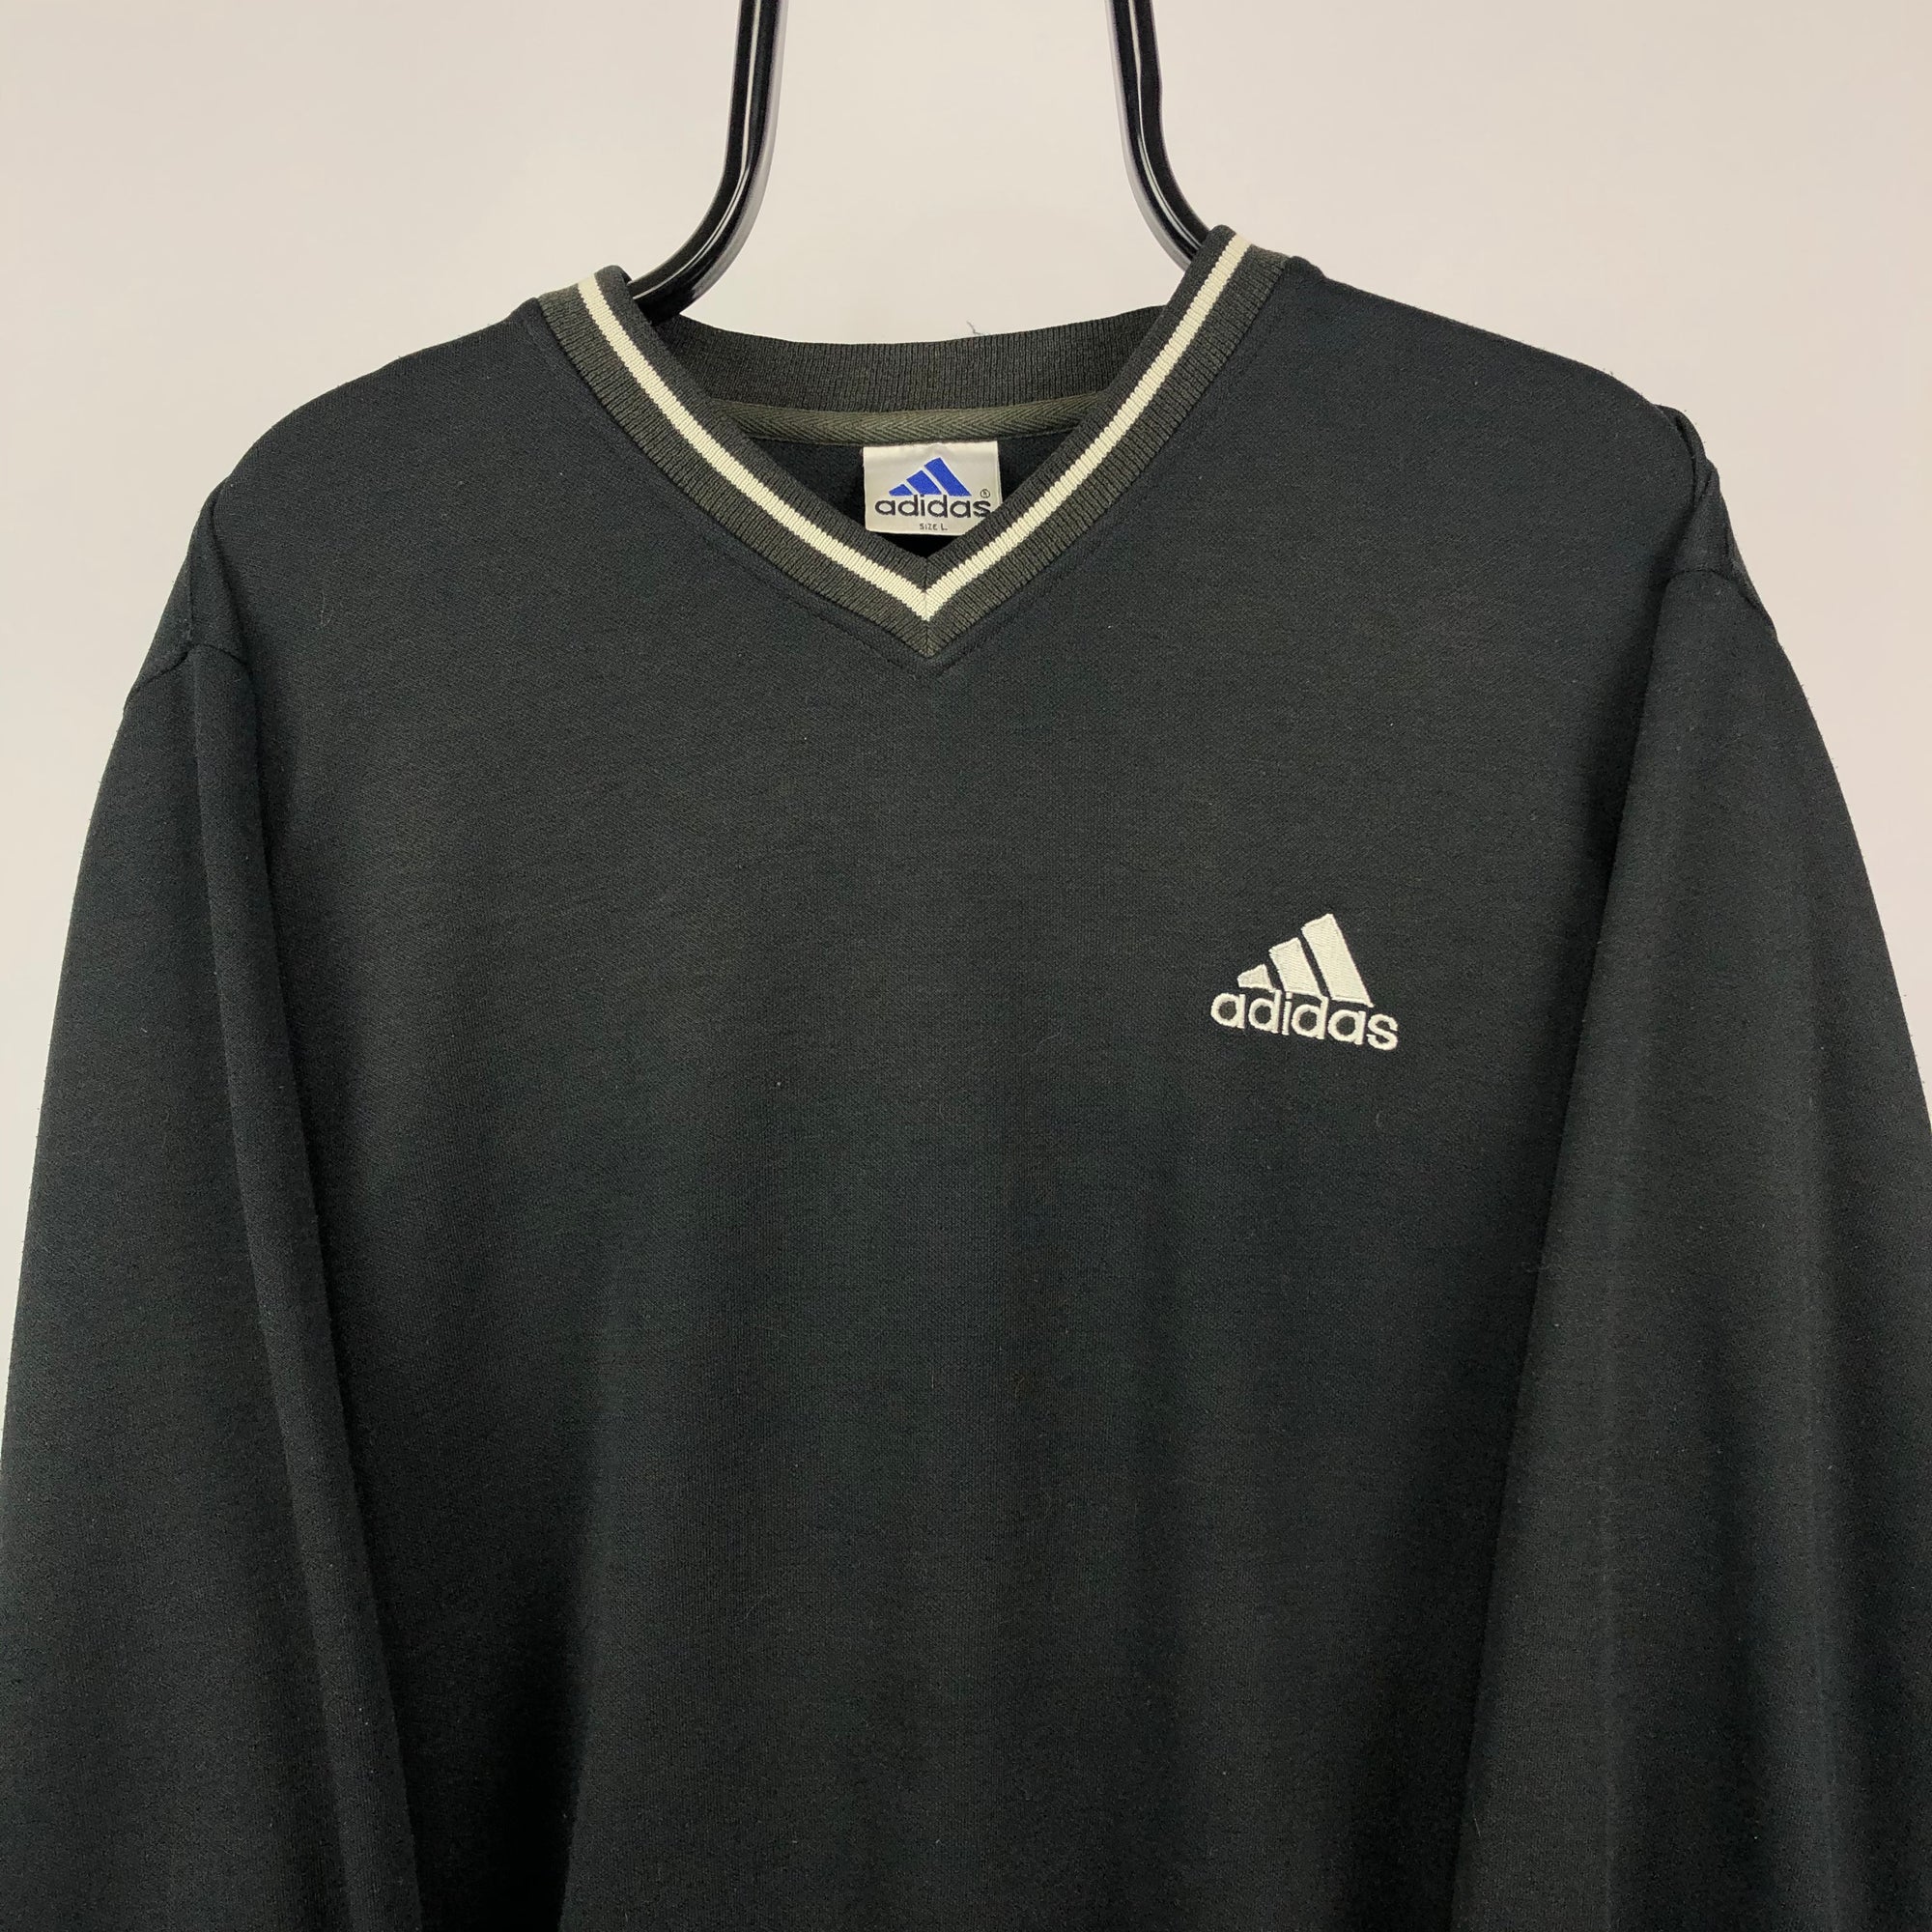 Vintage 90s Adidas Embroidered Small Logo Sweatshirt in Black - Men's Medium/Women's Large